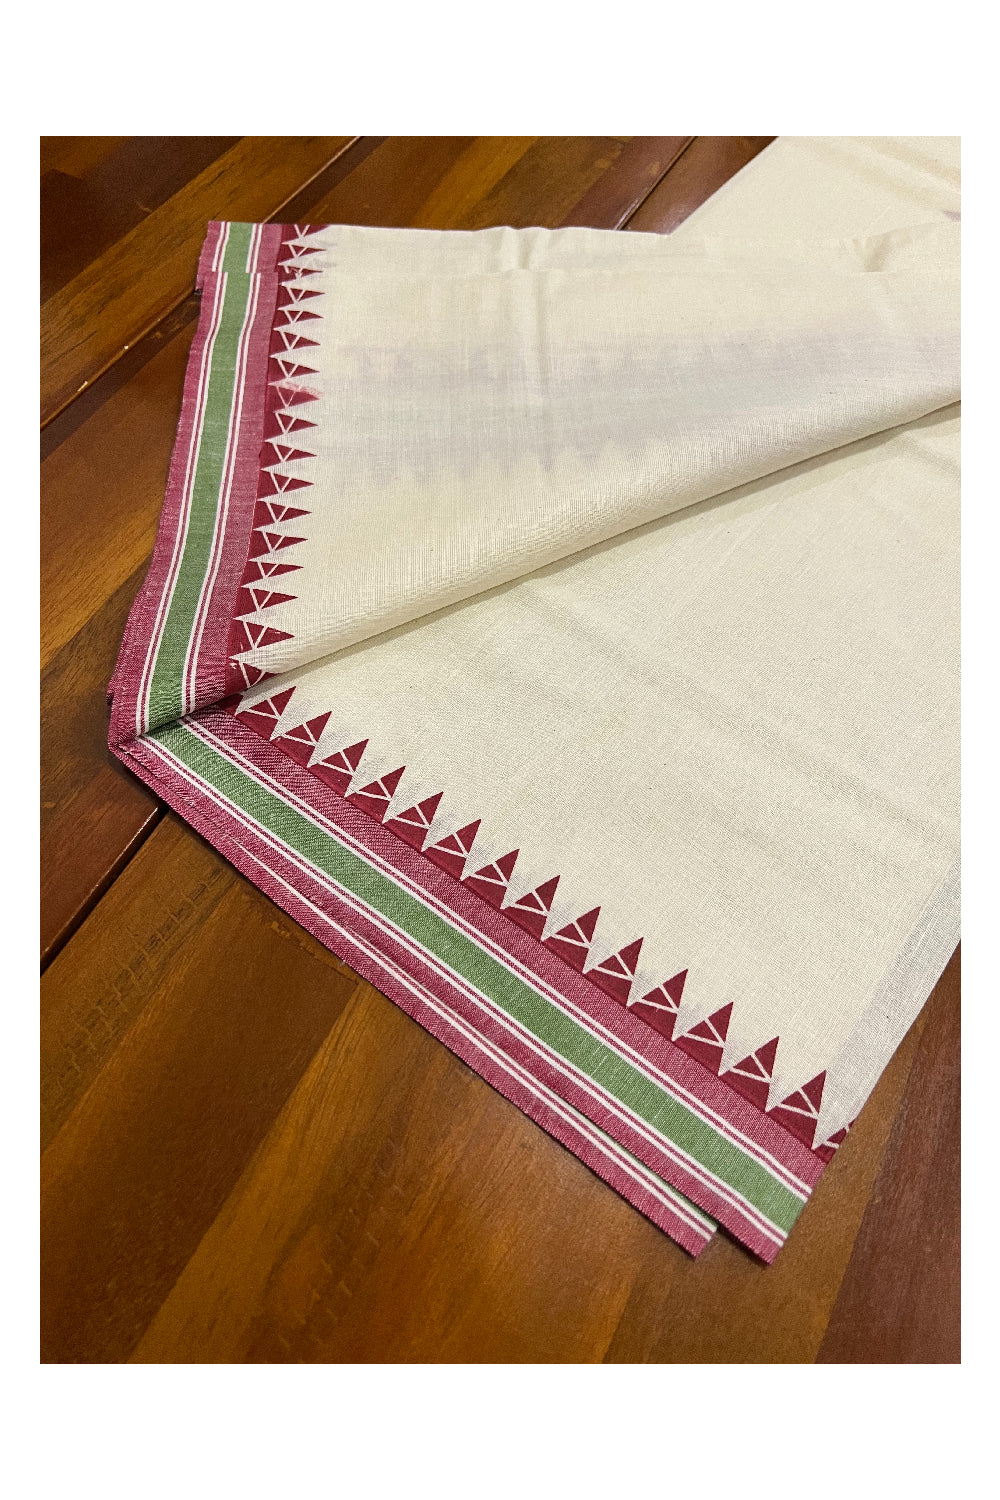 Kerala Cotton Mulloth Mundum Neriyathum Single (Set Mundu) with Dark Red Temple Block Prints on Green and Dark Red Border (Extra Soft Cotton)